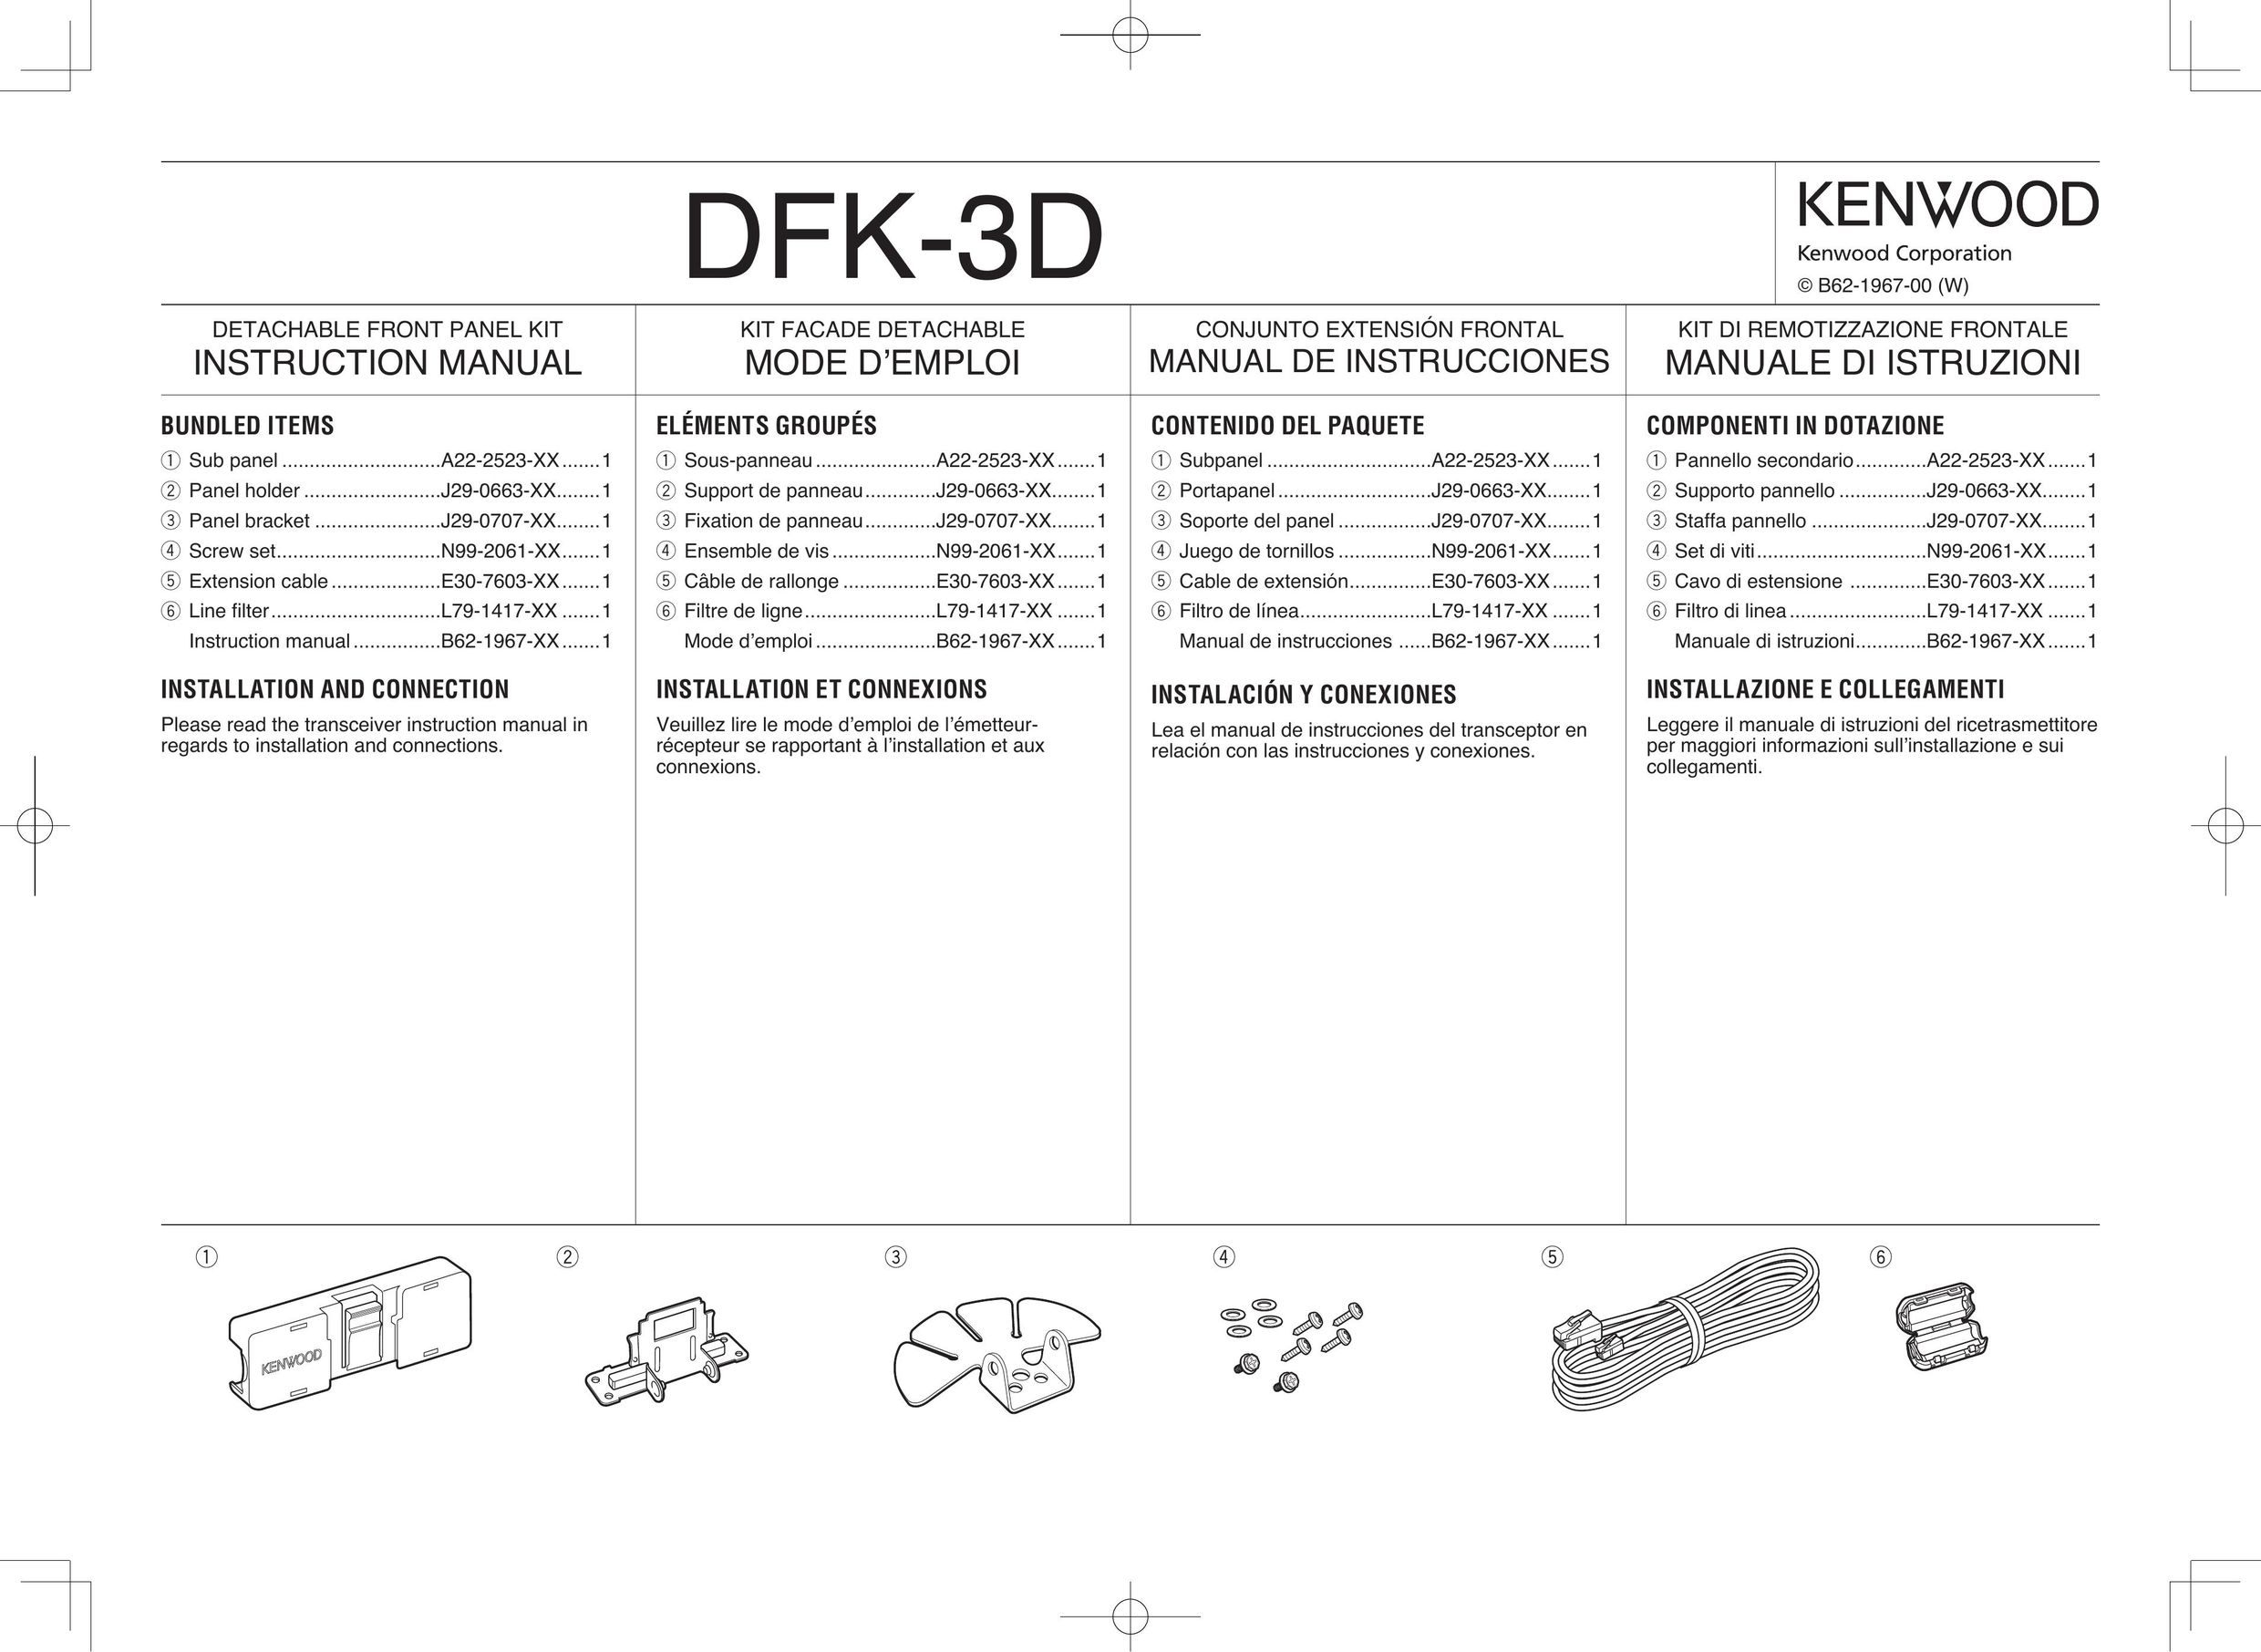 Kenwood DFK-3D Welding System User Manual